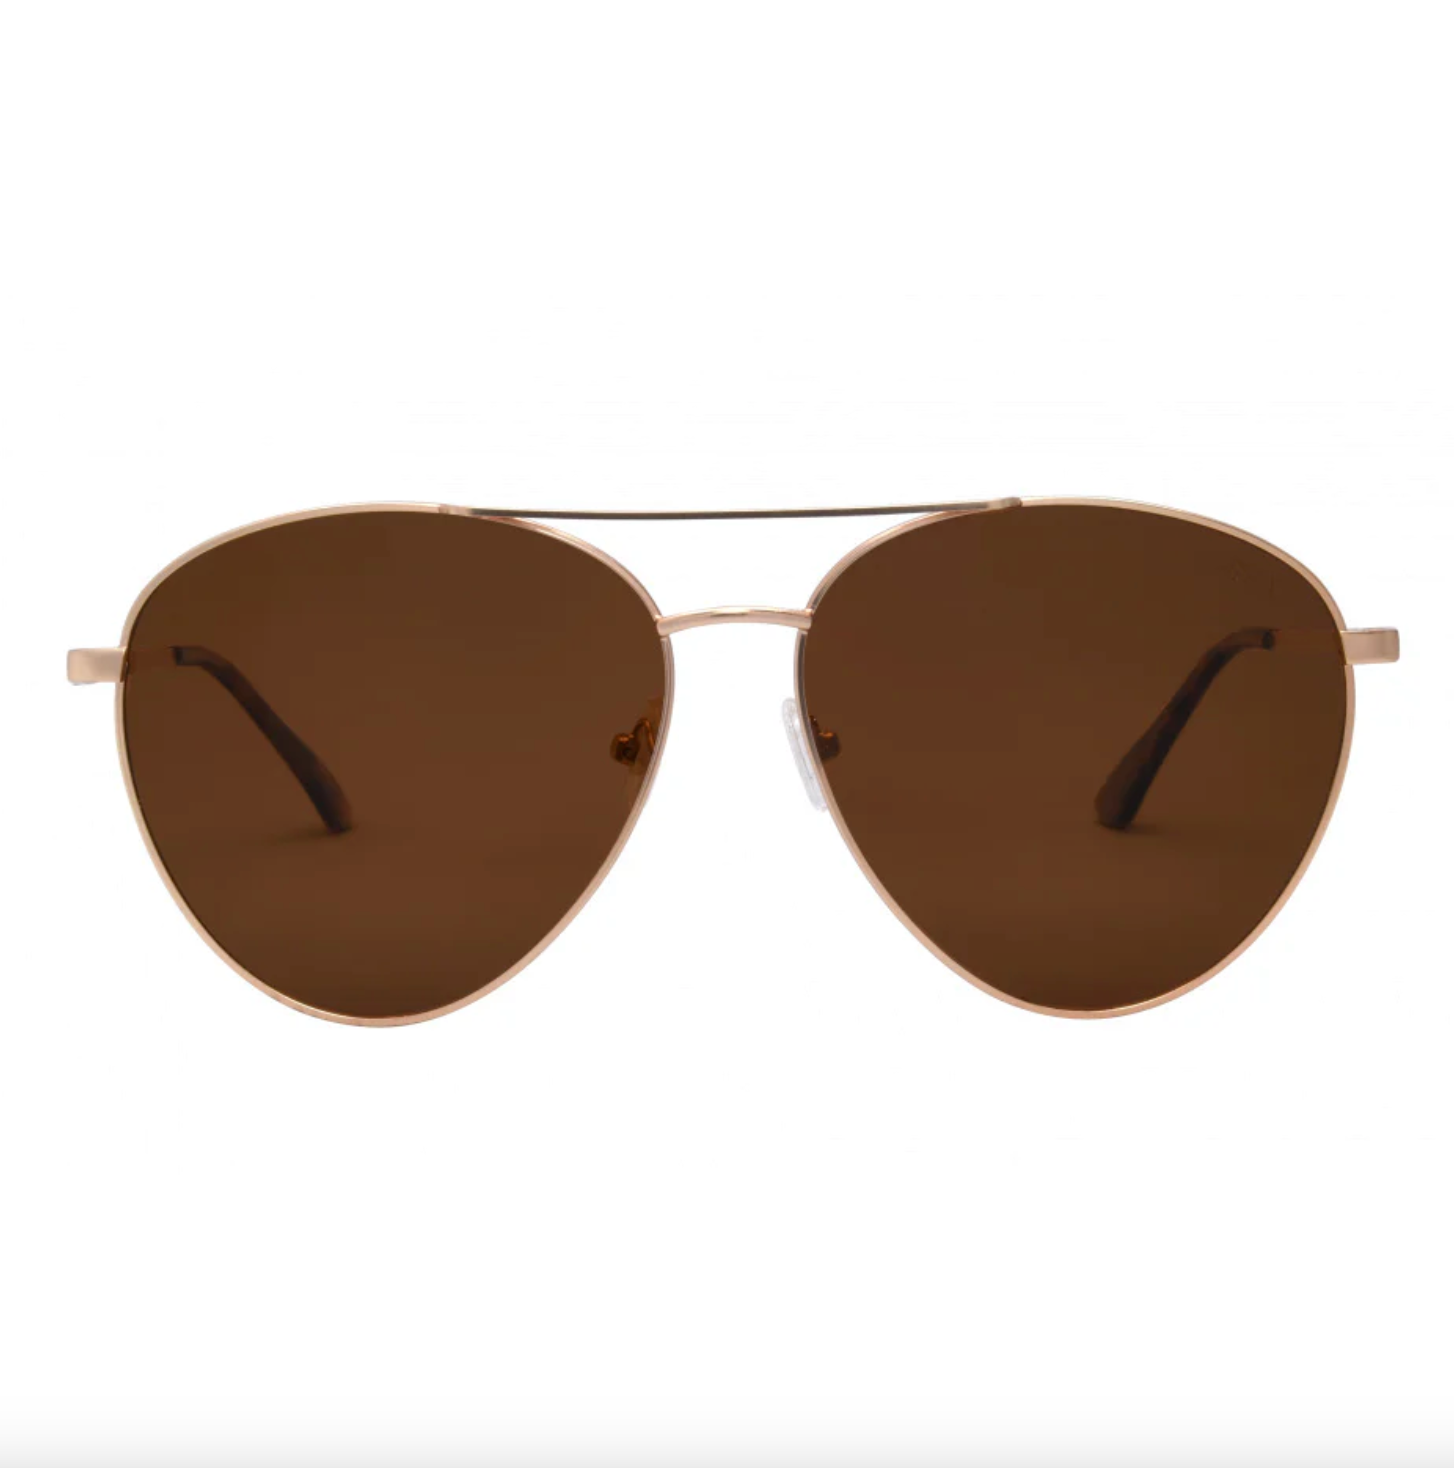 I-Sea Charlie Sunglasses Sunglasses in Oatmeal/Brown at Wrapsody